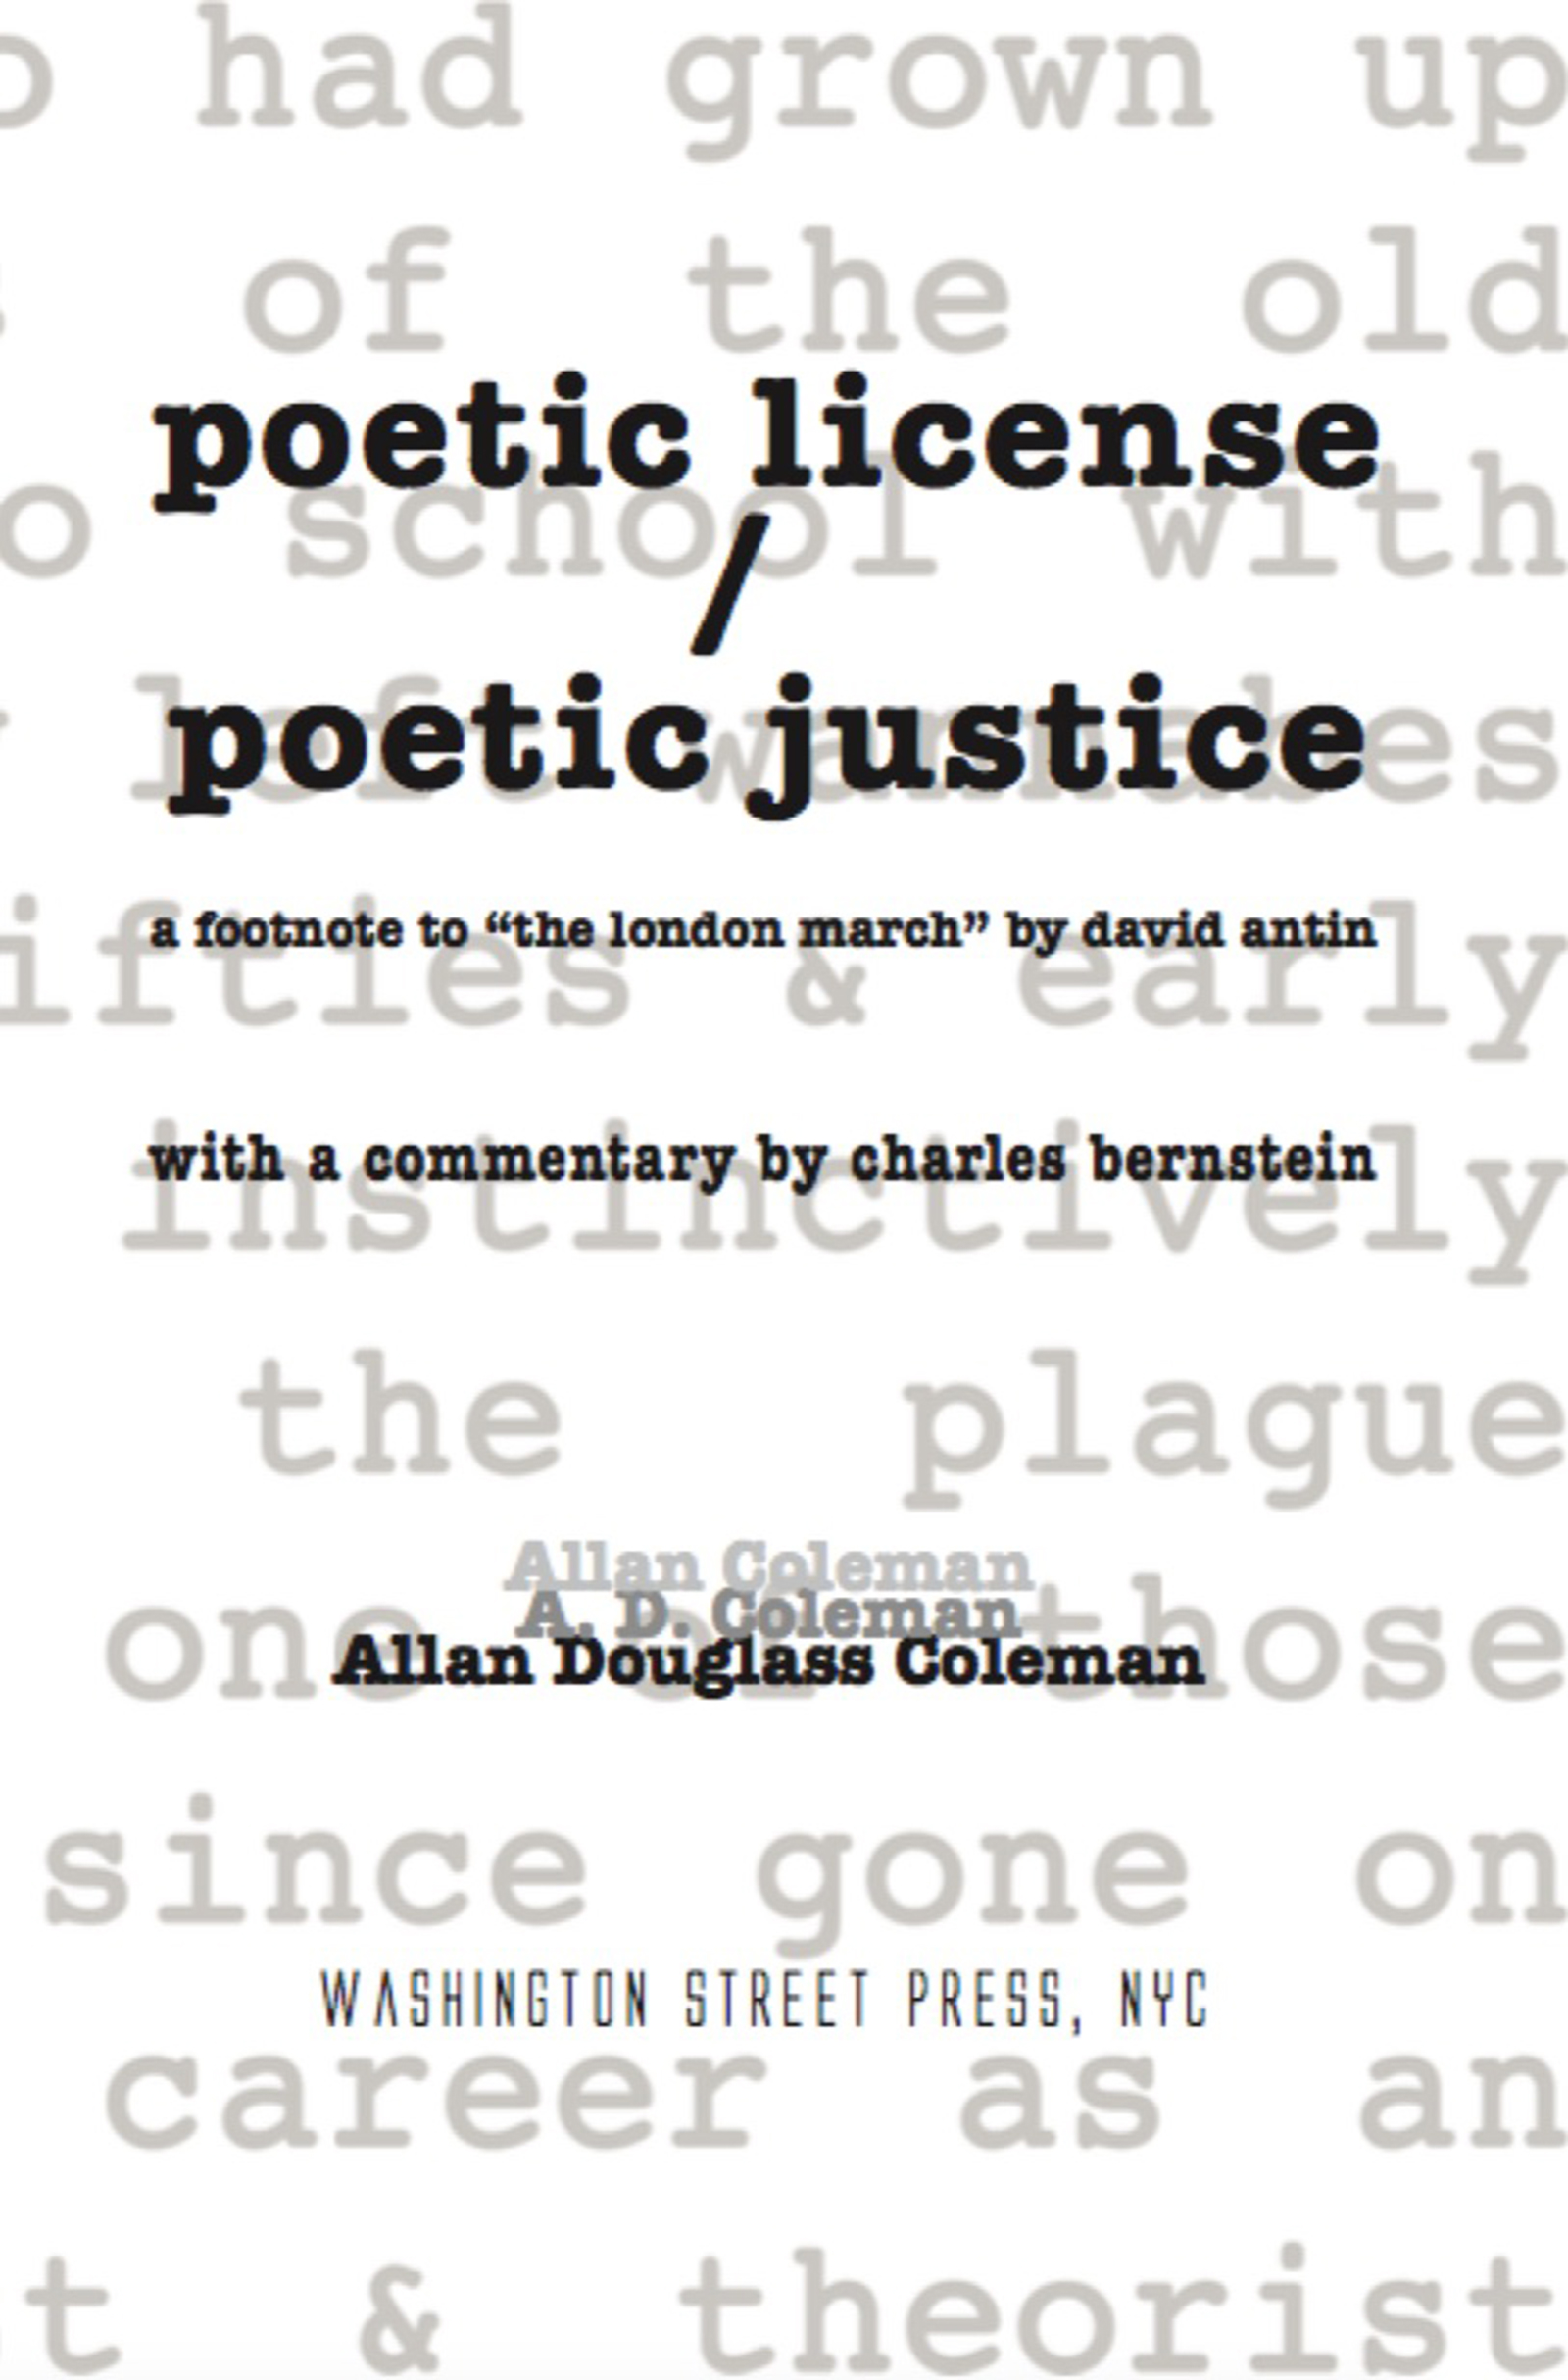 Allan Douglass Coleman, poetic license / poetic justice (2020), cover